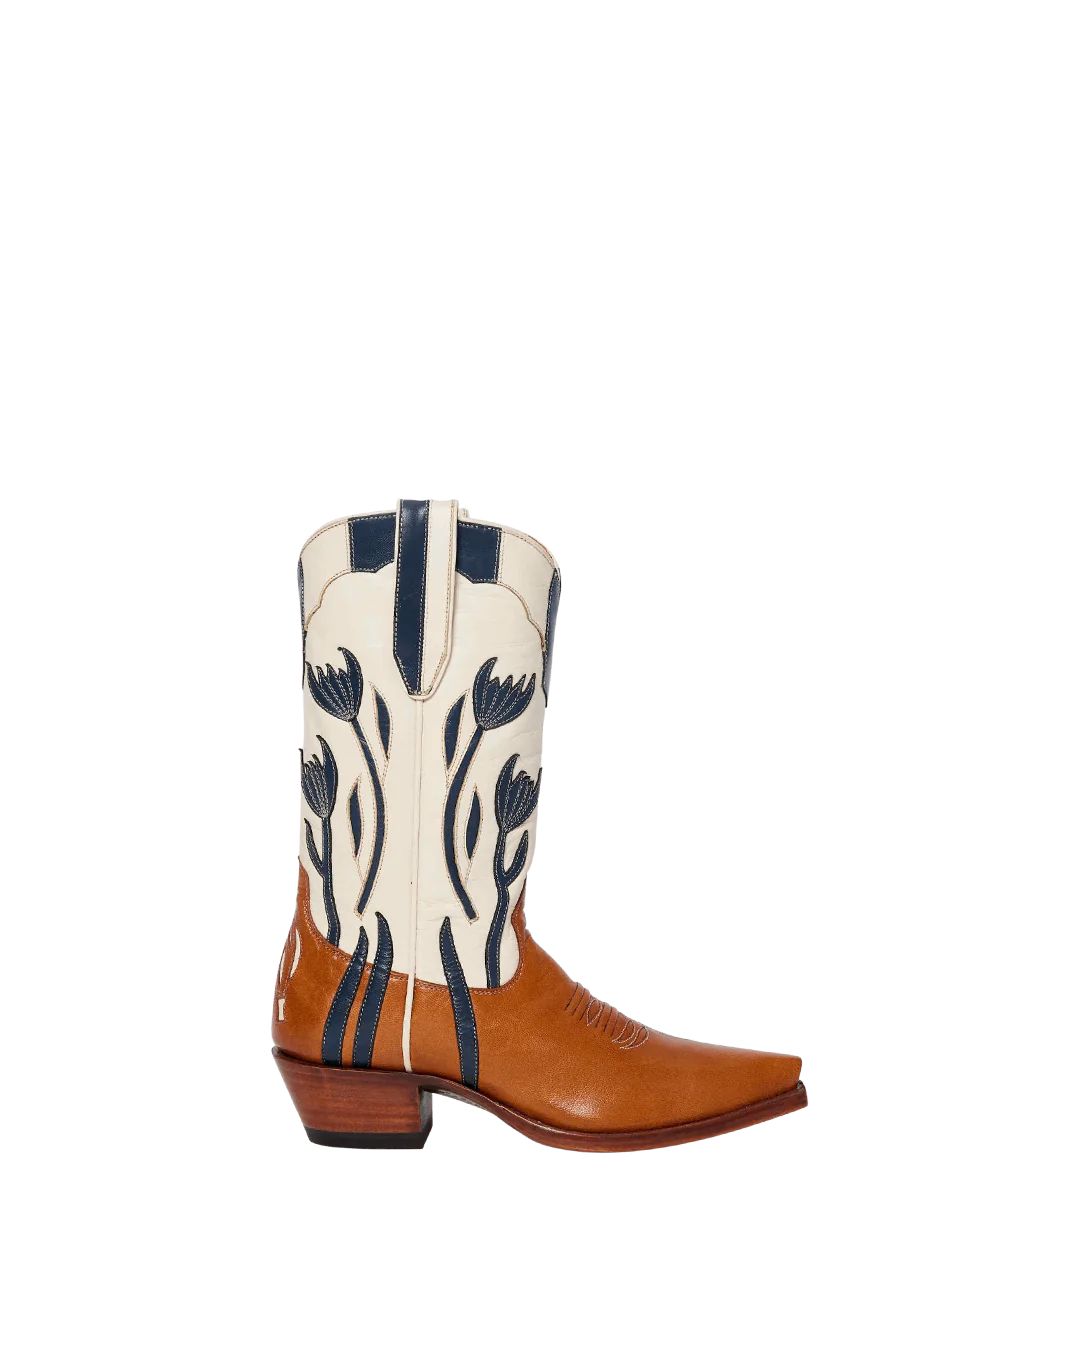 Dolly 2.0 Crème | Luxury Fashion Women's Cowboy Boots | Miron Crosby | Miron Crosby